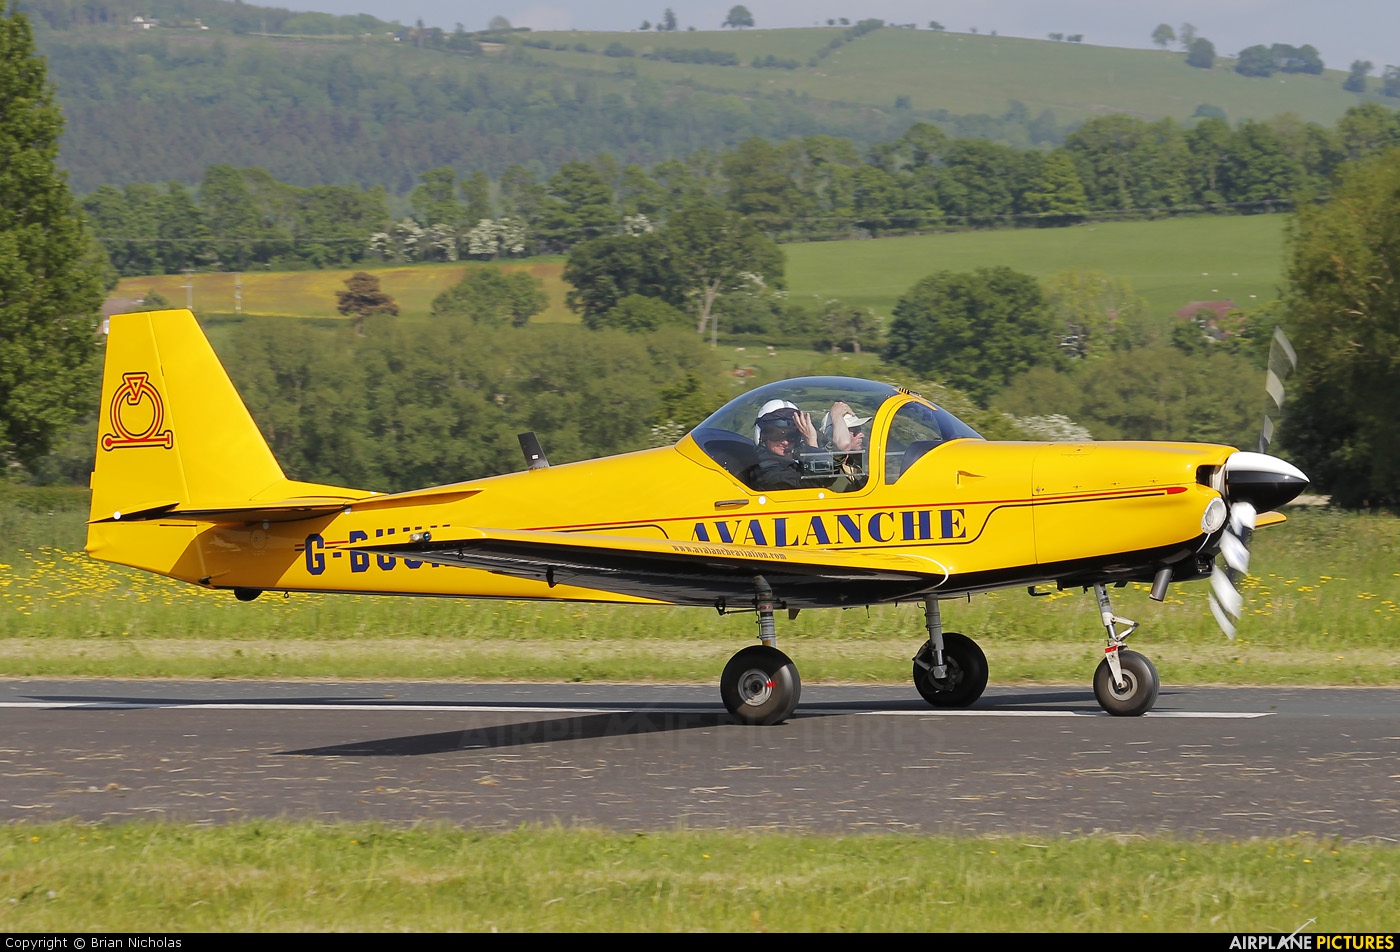 Avalanche Aviation G-BUUK aircraft at Welshpool